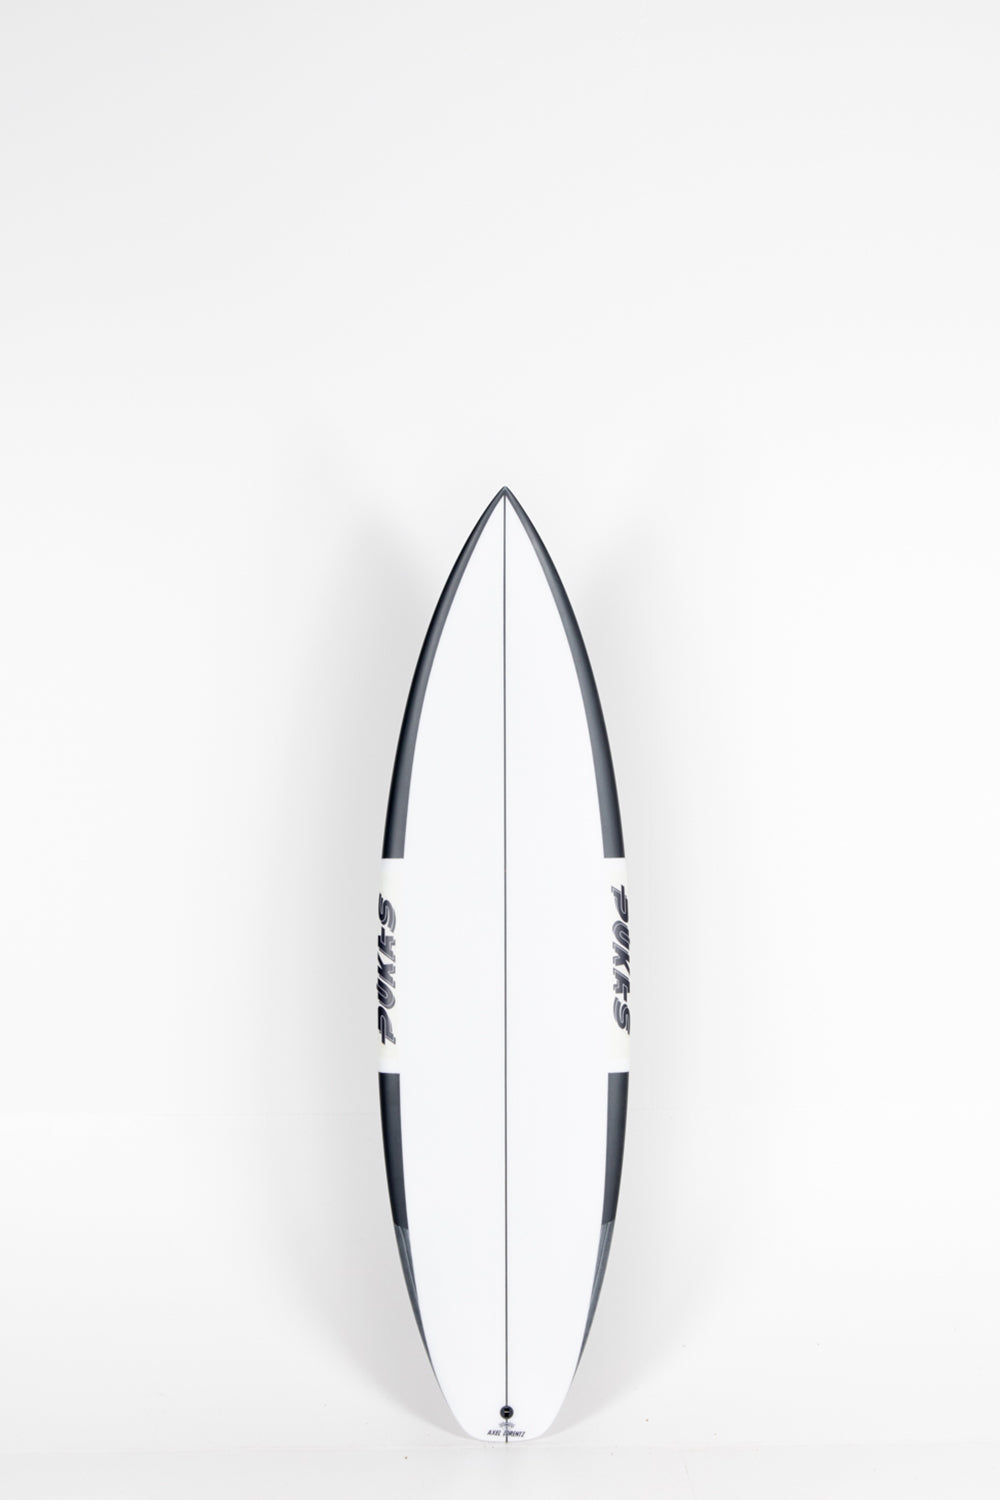 Pukas Surf Shop - Pukas Surfboard - DARKER by Axel Lorentz - 6'1" x 19,63 x 2,4 x 30,67L. - AX05457